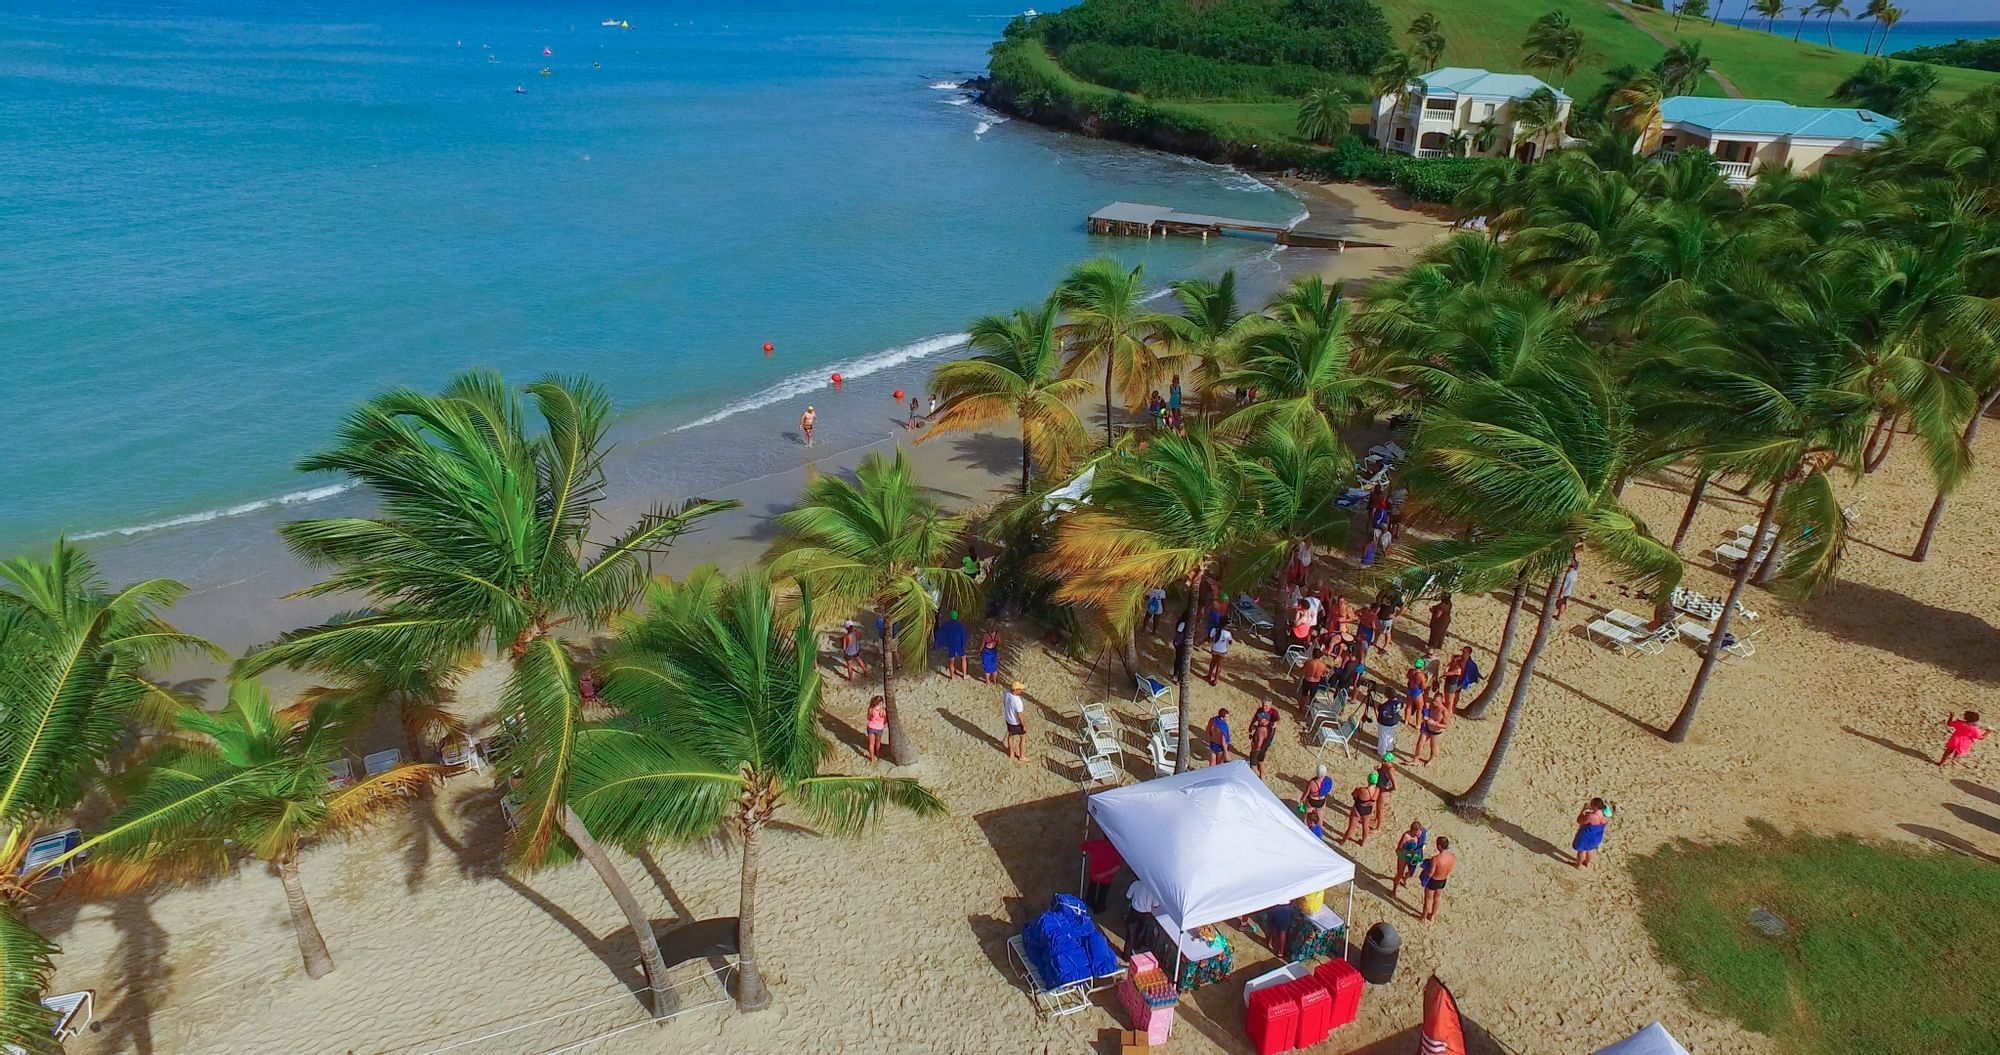 Aerial view of the crowd in Mermaid Beach near The Buccaneer Resort St. Croix